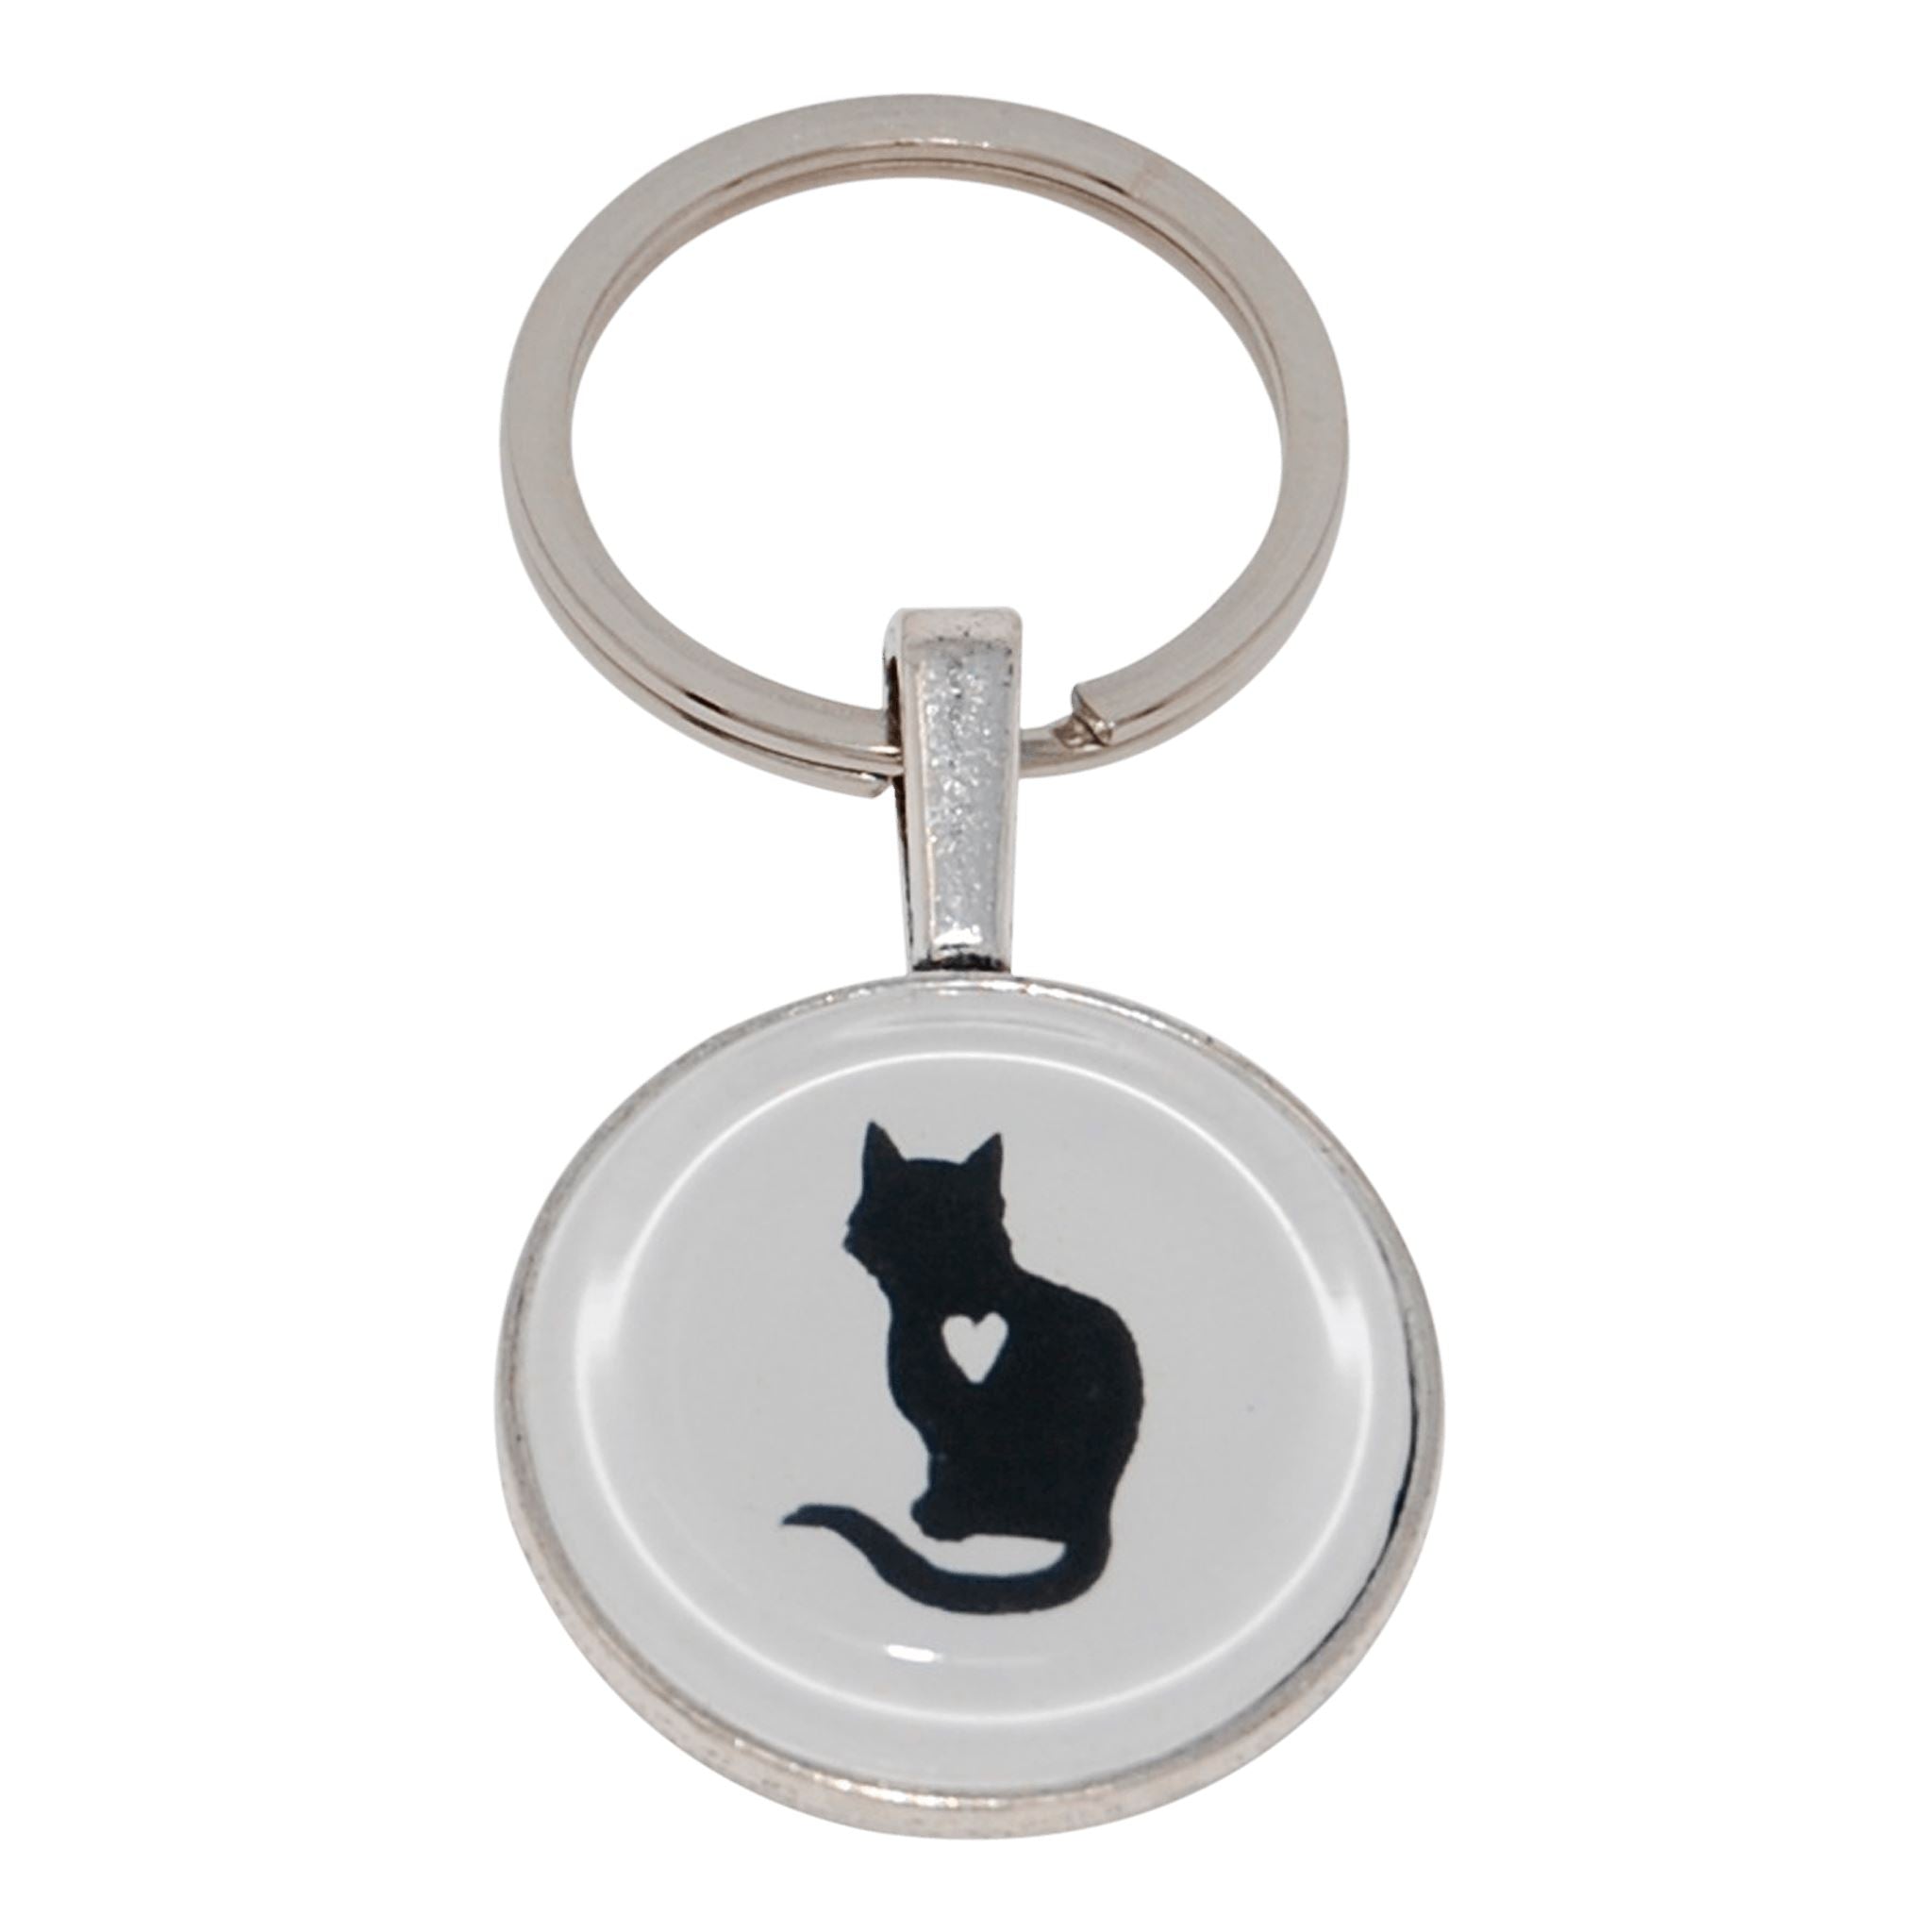 Kitty Love Vintage Key Chain cat Keychain 